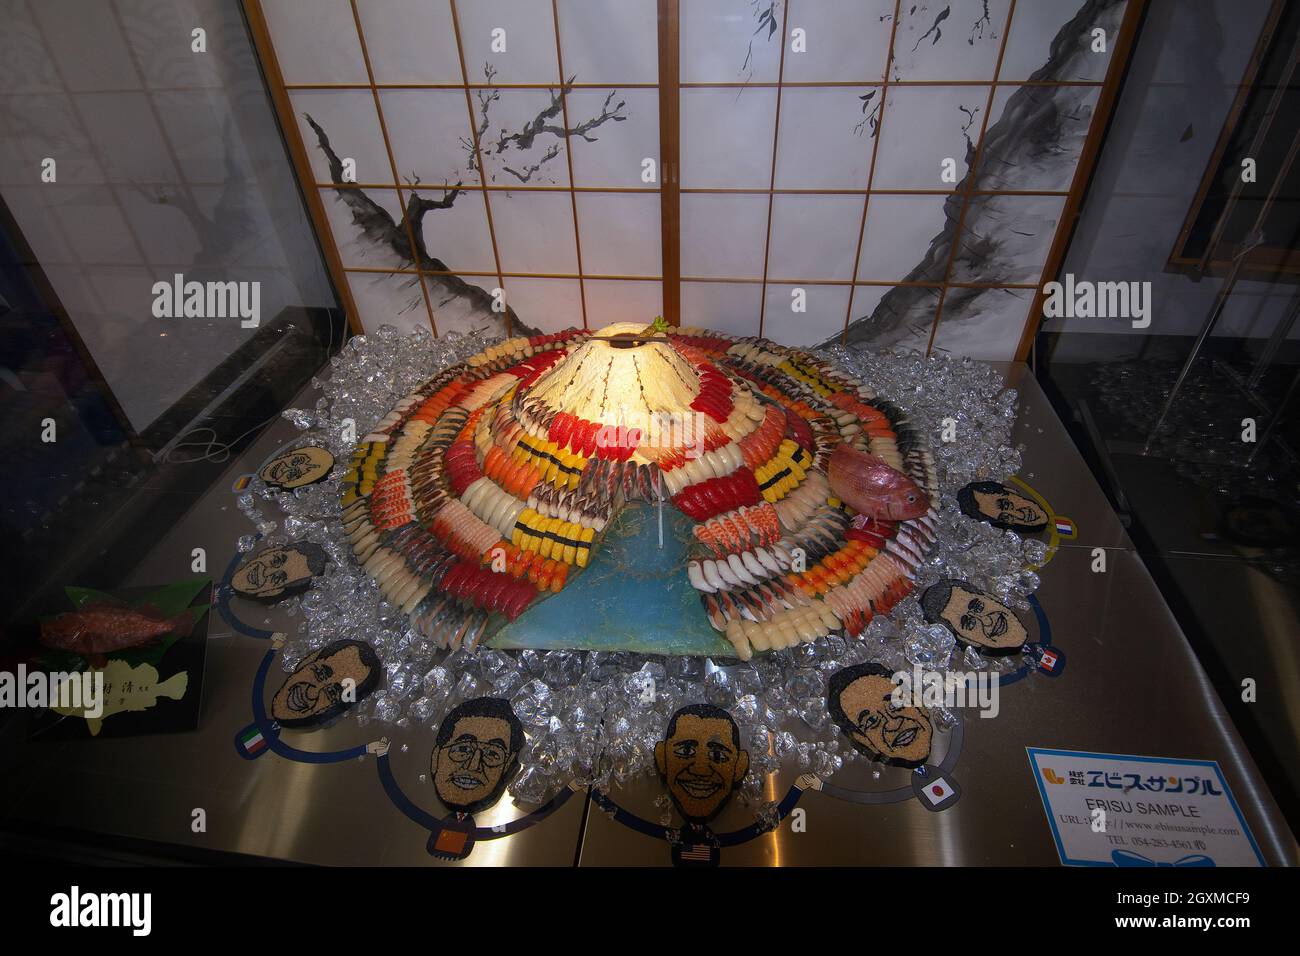 Wax models of sushi displayed as Mount Fuji in a mall, Shimizu, Shizuoka Prefecture, Japan Stock Photo